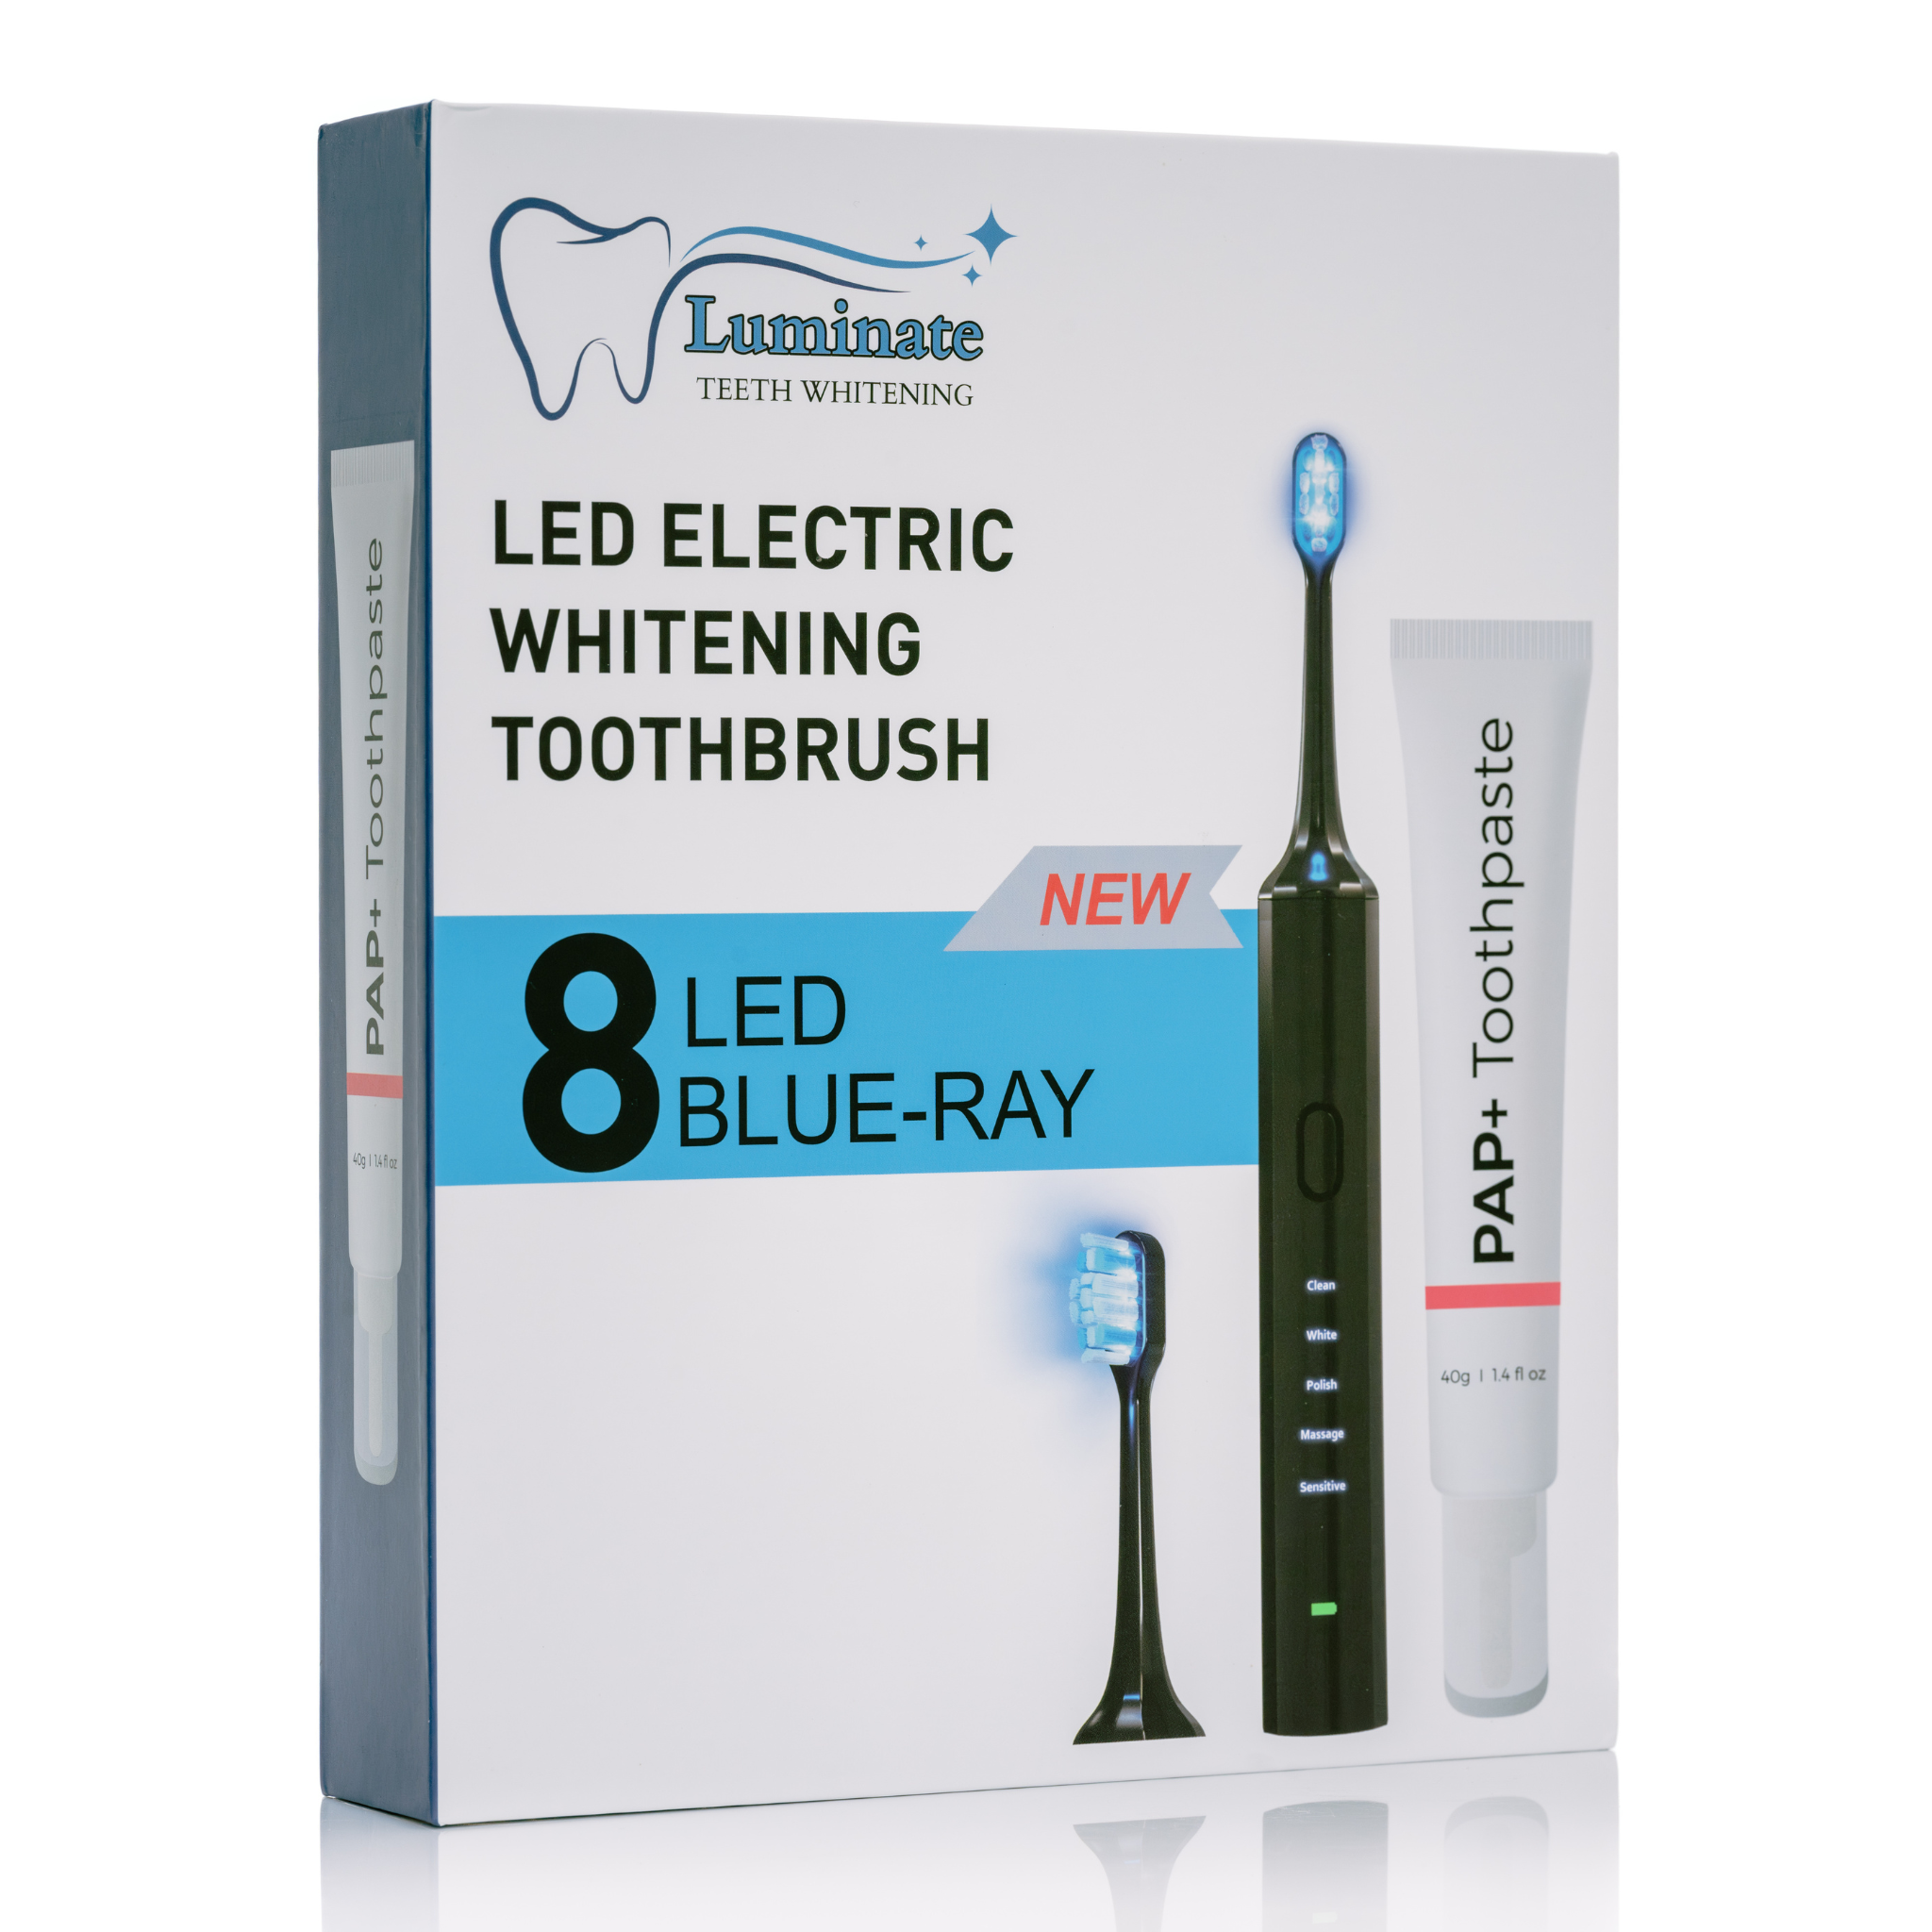 LED Electric Whitening Toothbrush